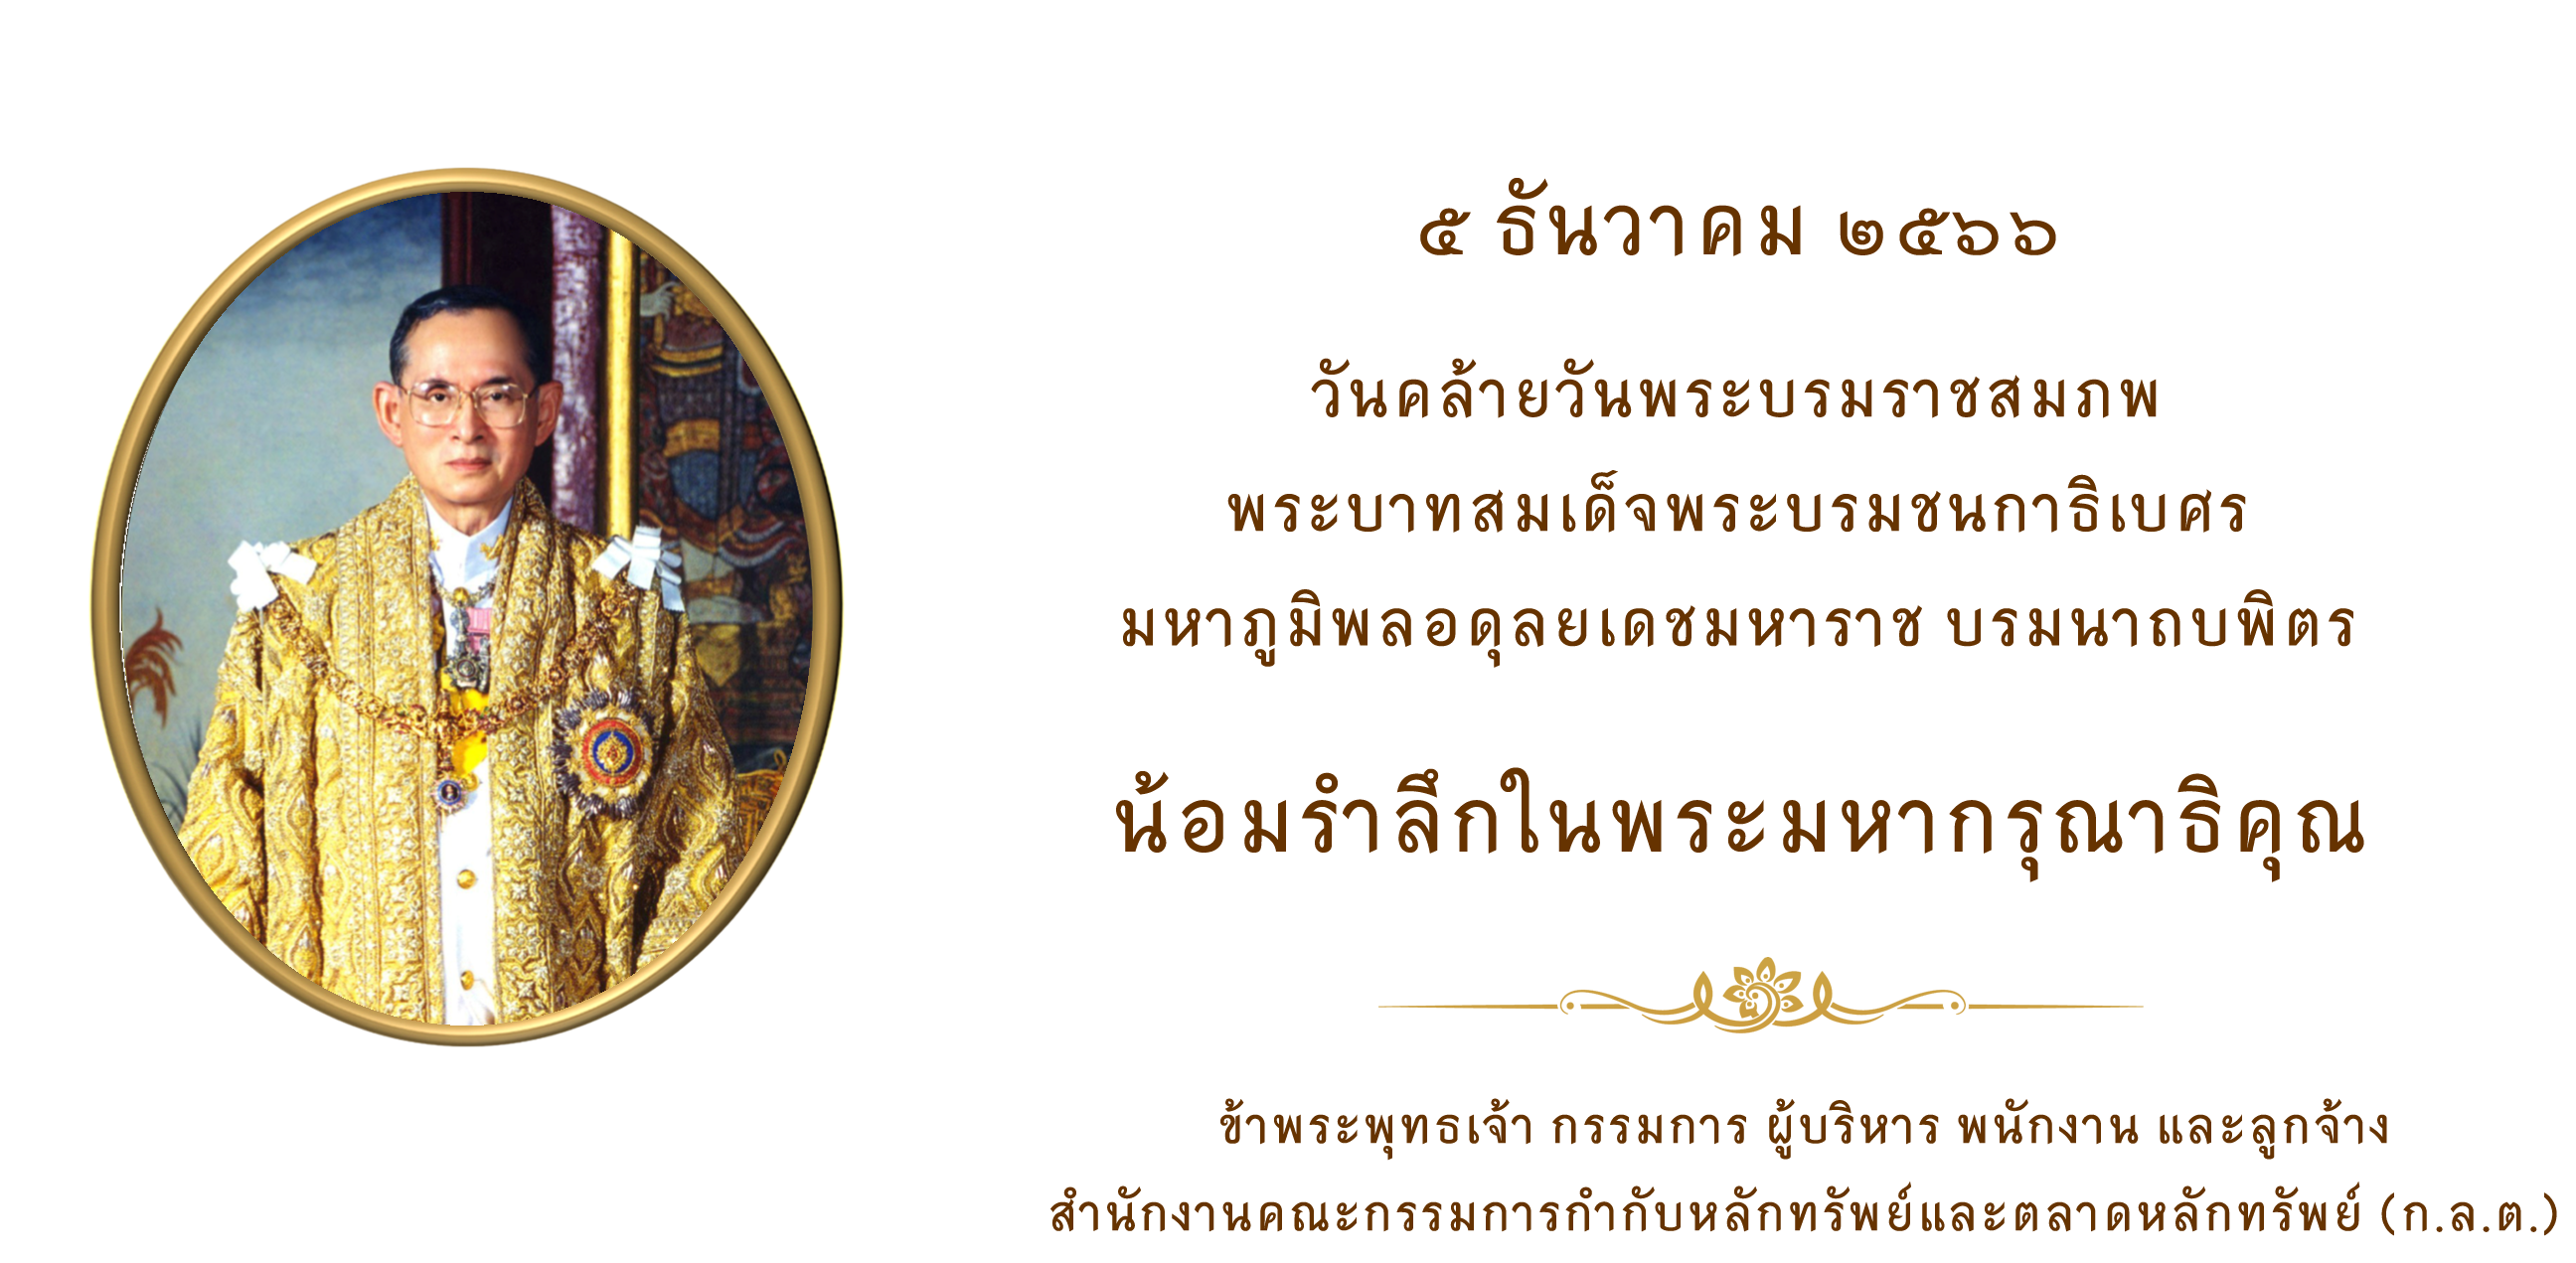 hmk-bhumibol-adulyadej-the-great